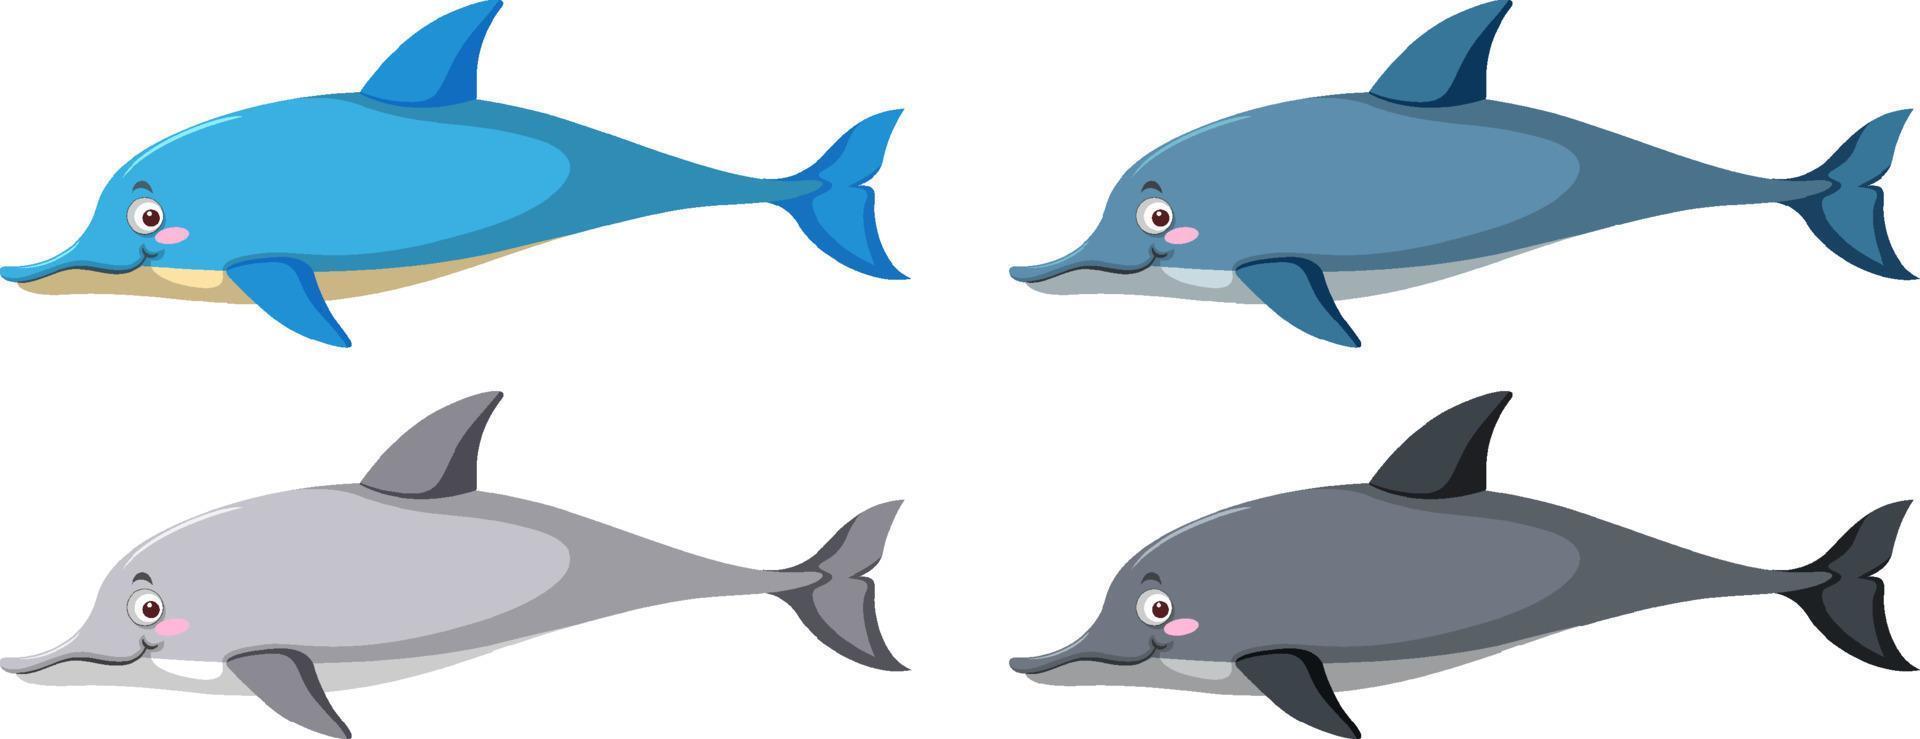 satz verschiedener delfine im karikaturstil vektor